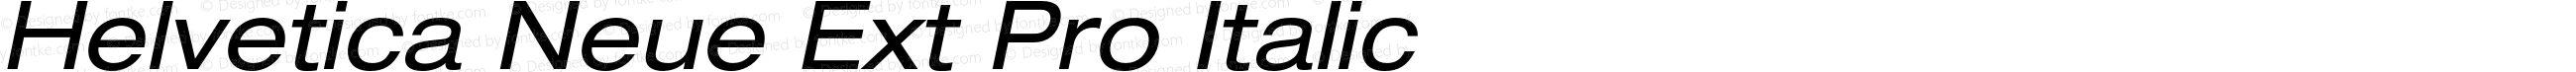 HelveticaNeueExtPro-Italic